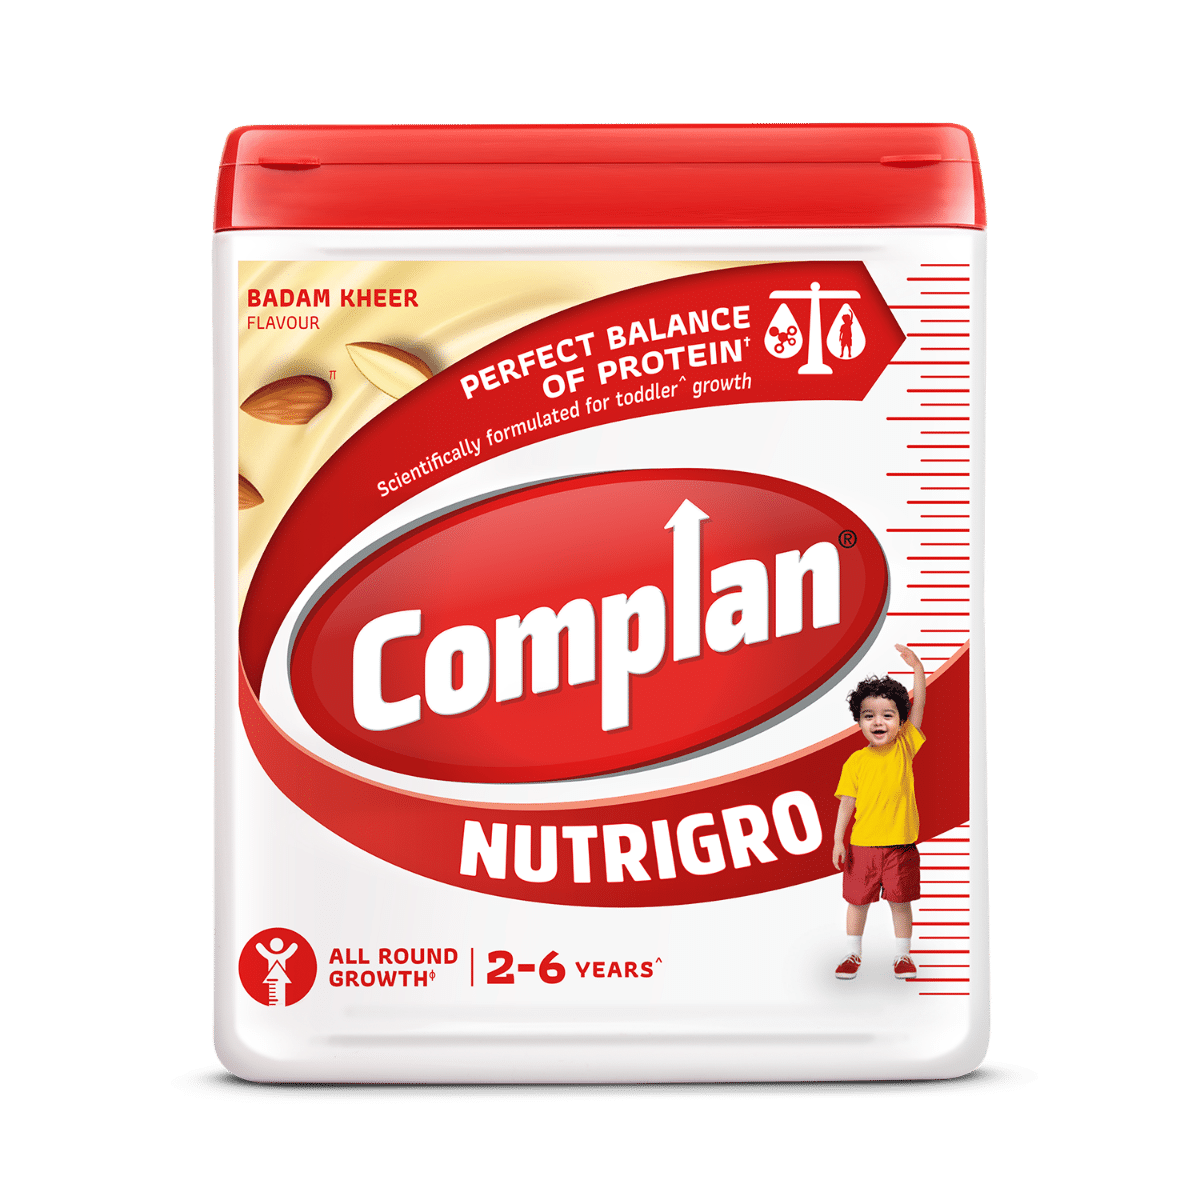 Buy Complan Nutrigro Badam Kheer Flavoured Nutrigro Health & Nutrition Drink, 400 gm Jar Online